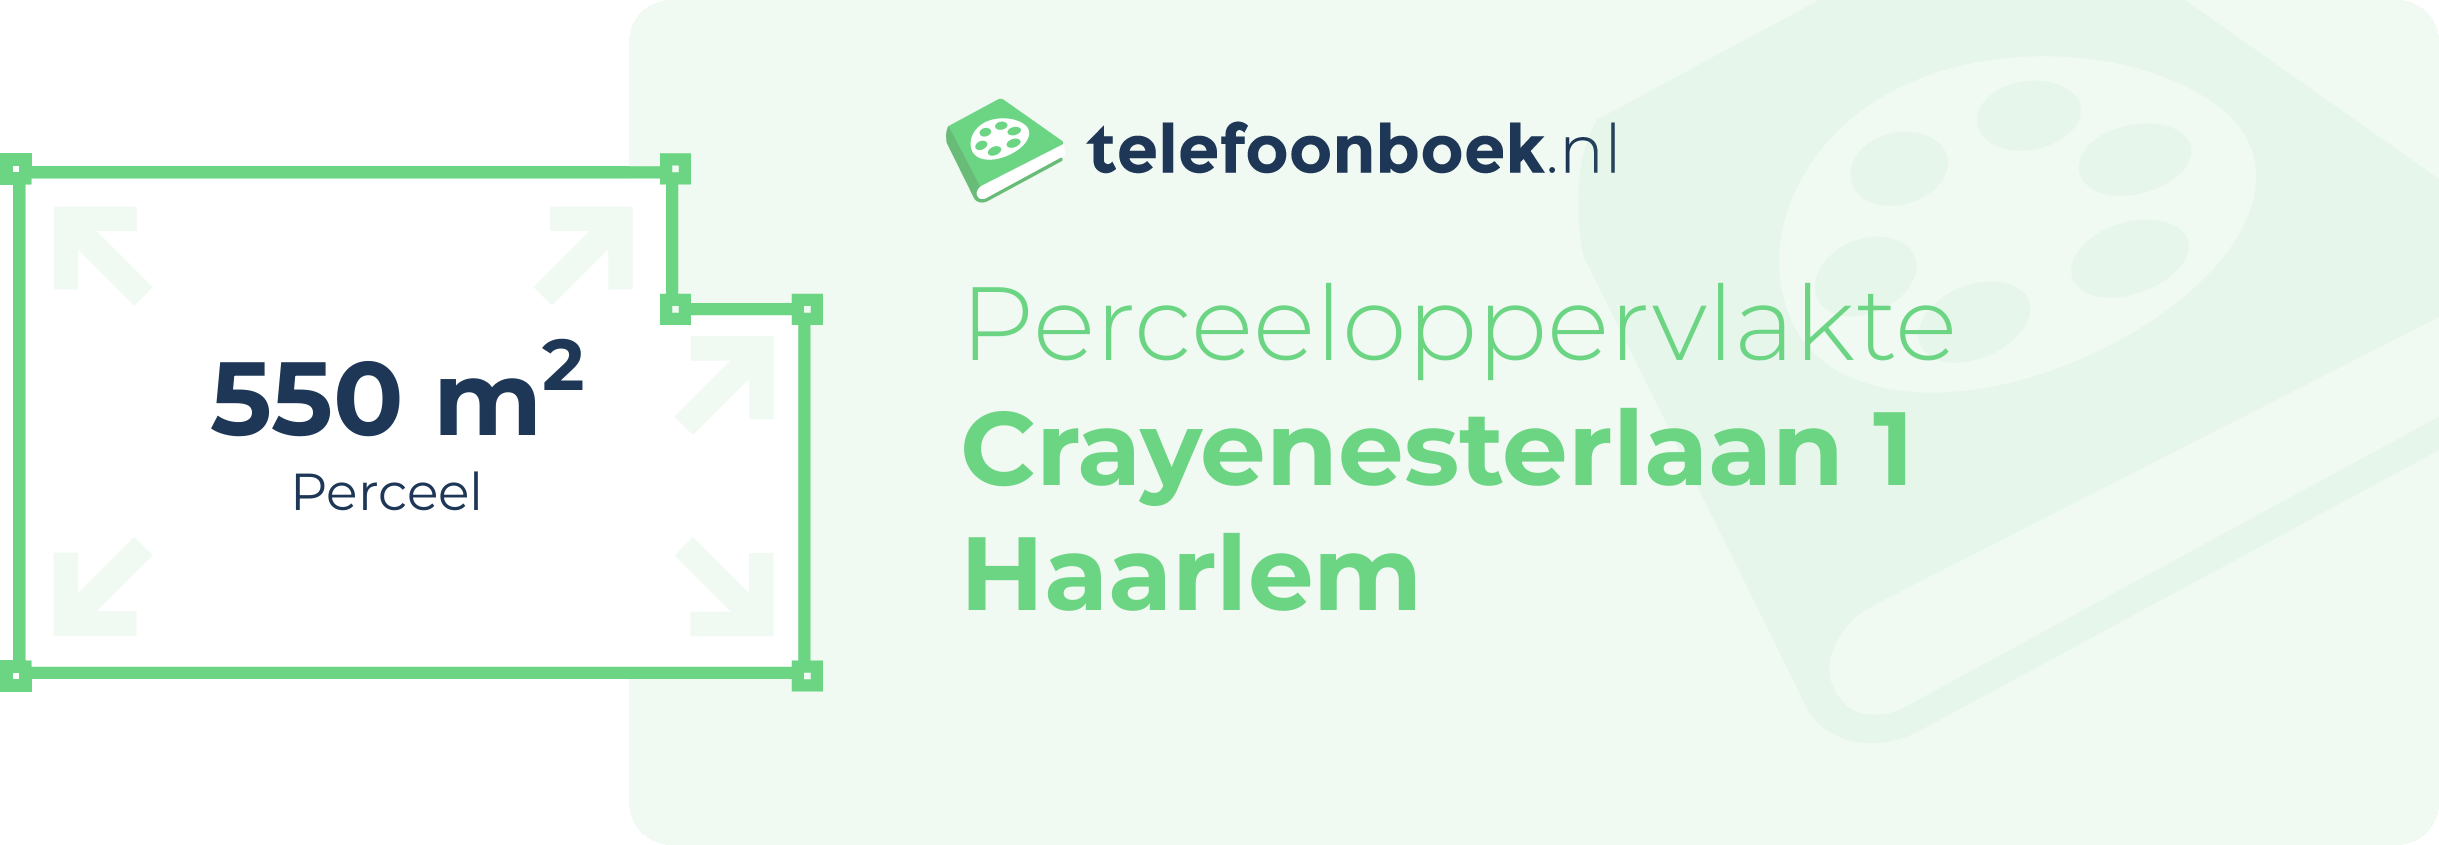 Perceeloppervlakte Crayenesterlaan 1 Haarlem